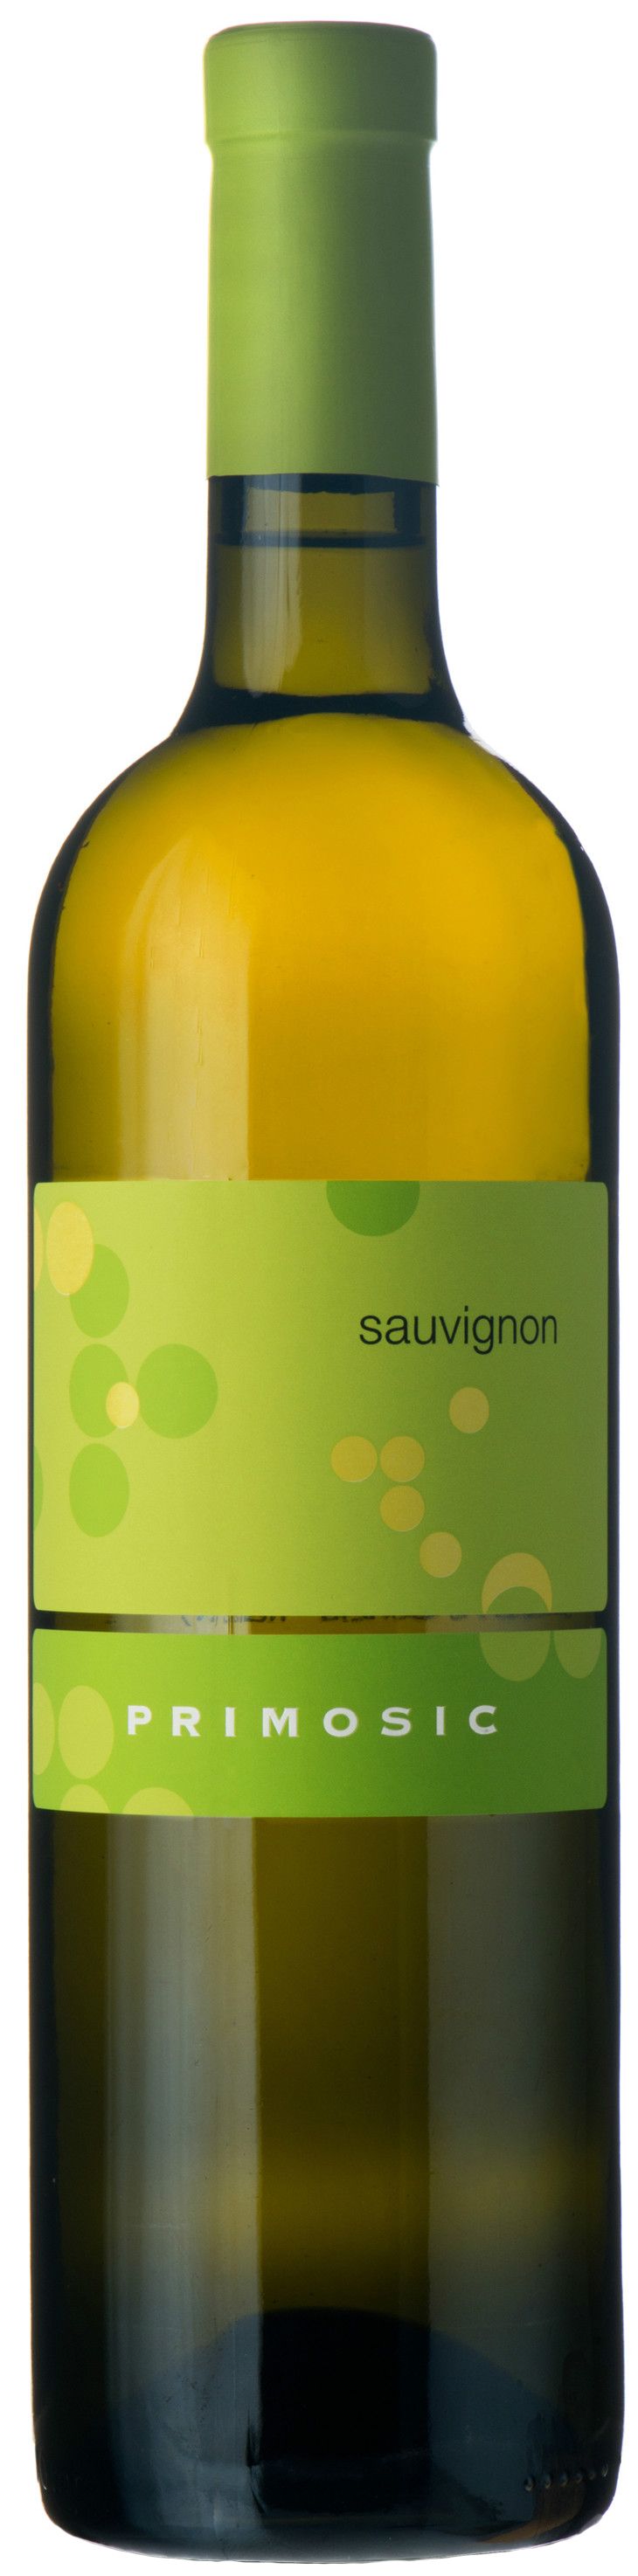 Primosic, Sauvignon Blanc, 2020